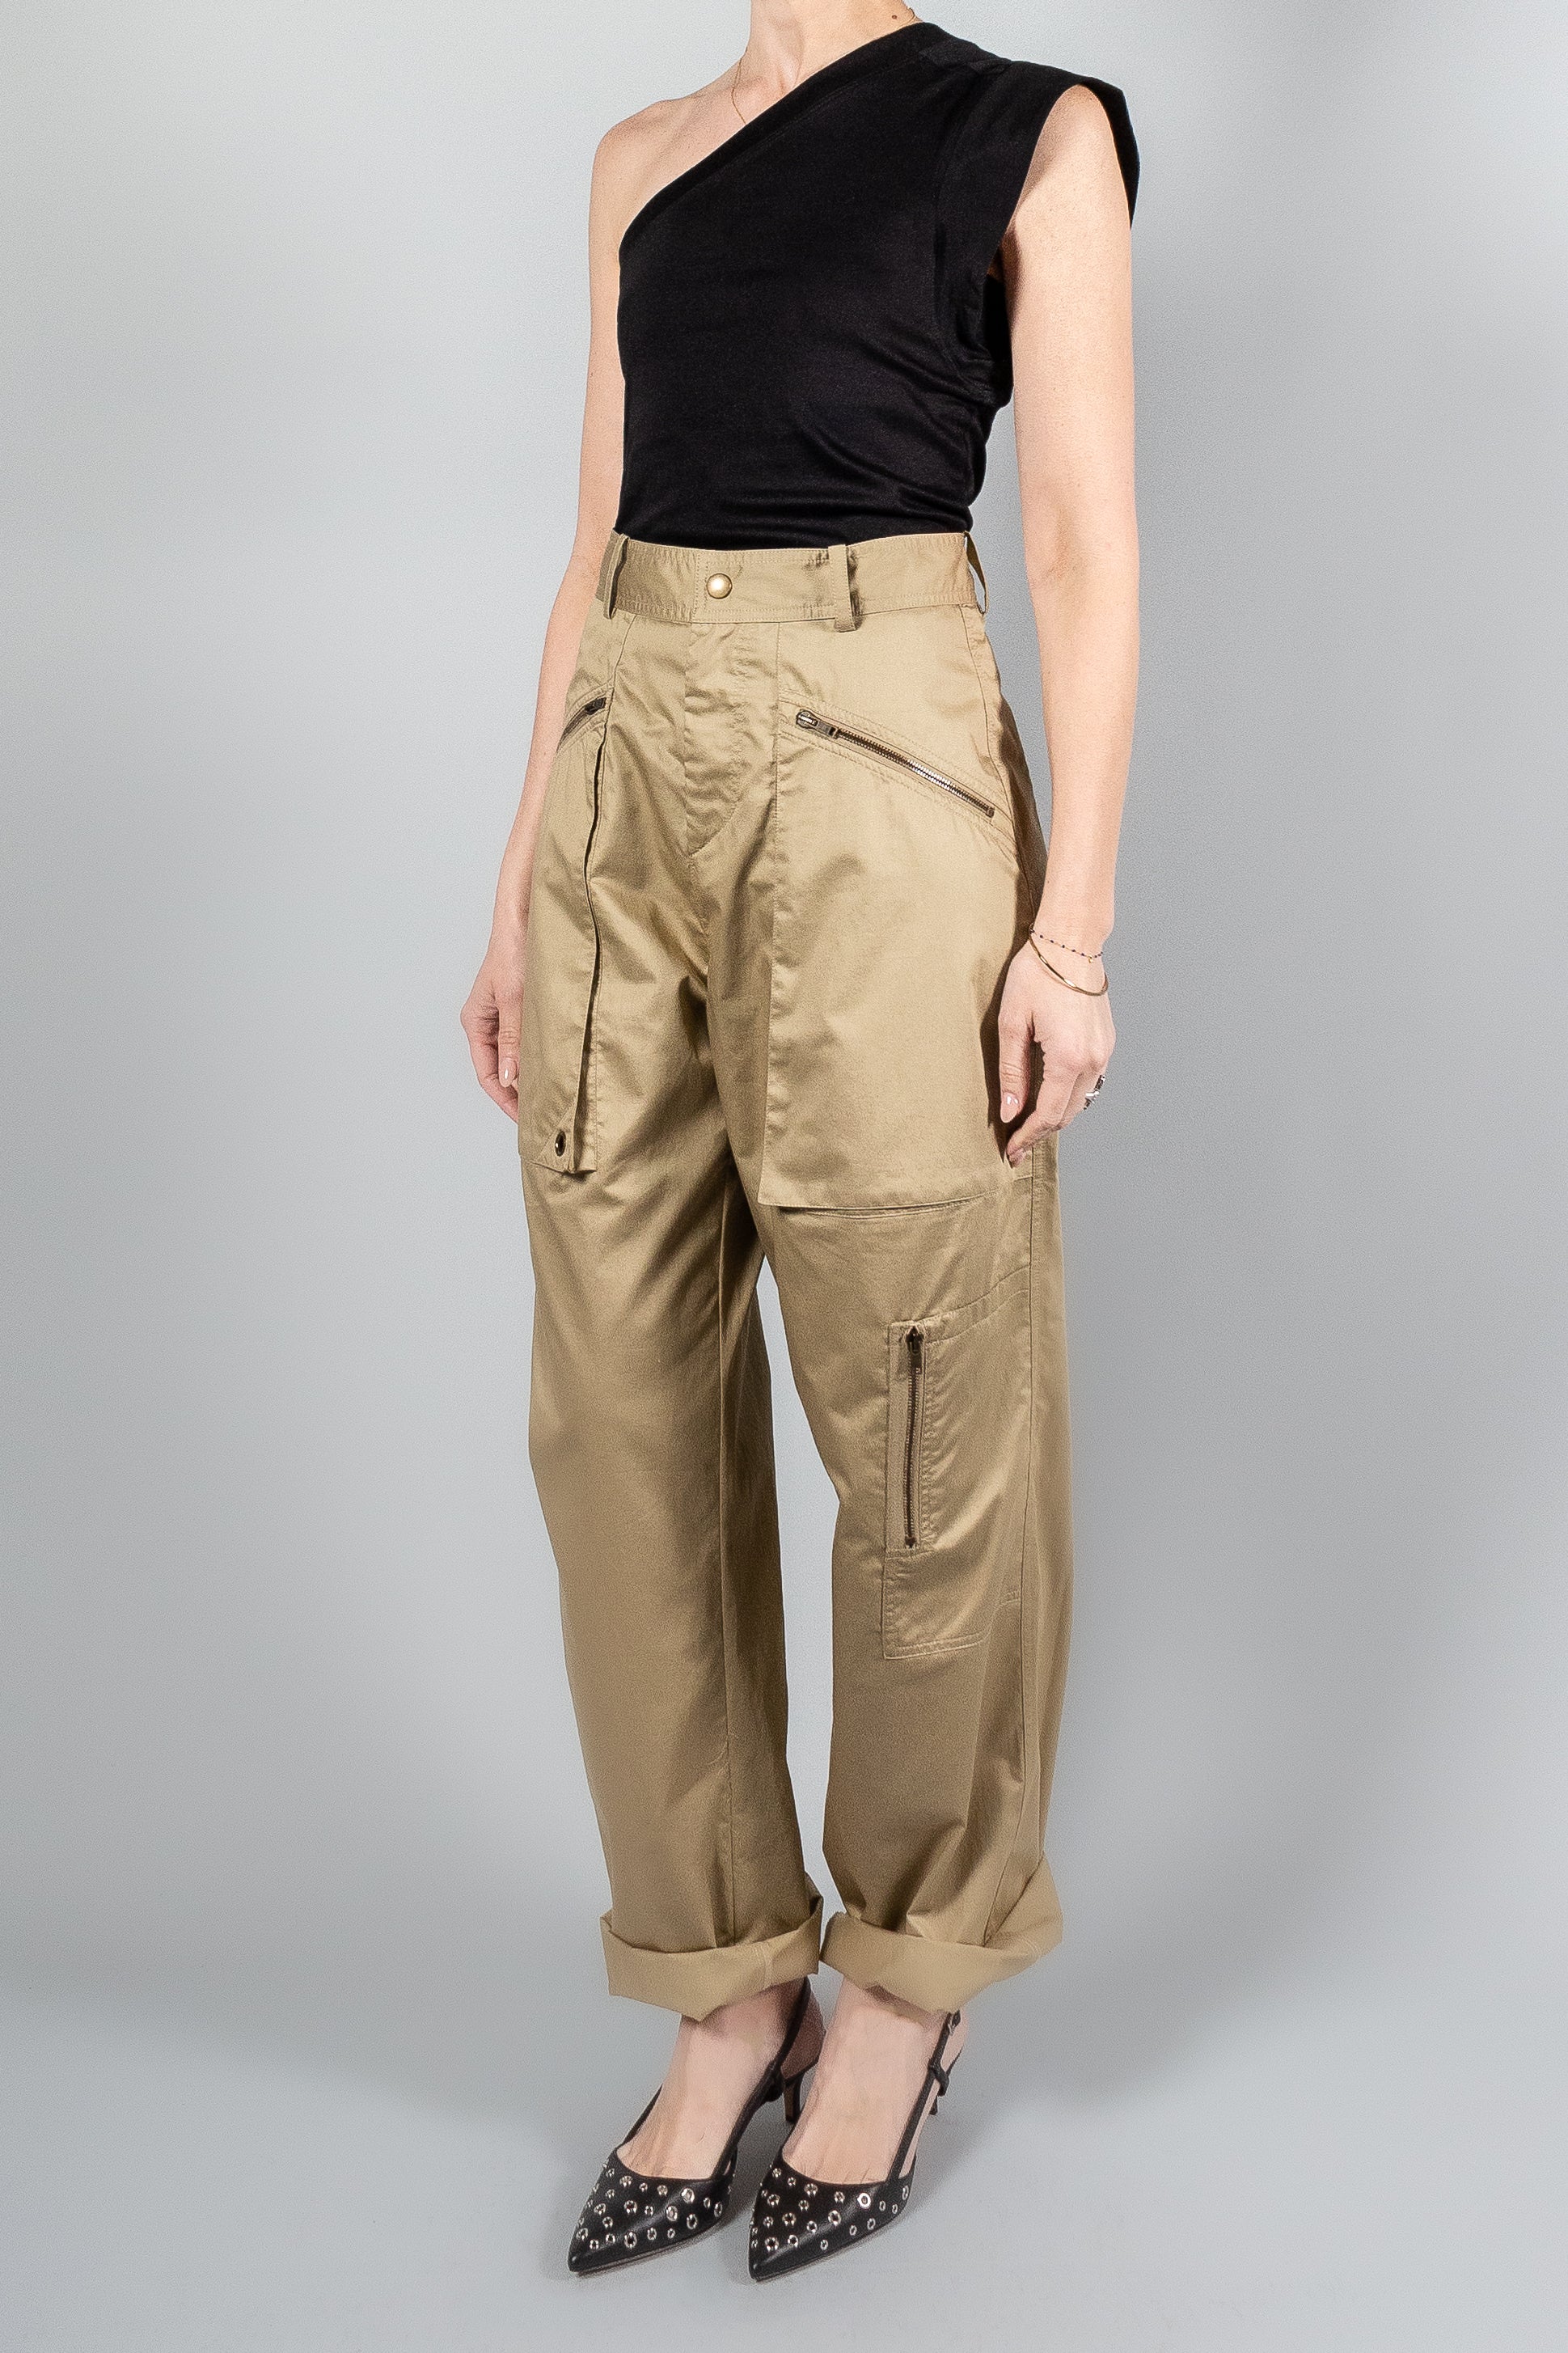 Isabel Marant Jolande Pants-Pants and Shorts-Misch-Boutique-Vancouver-Canada-misch.ca